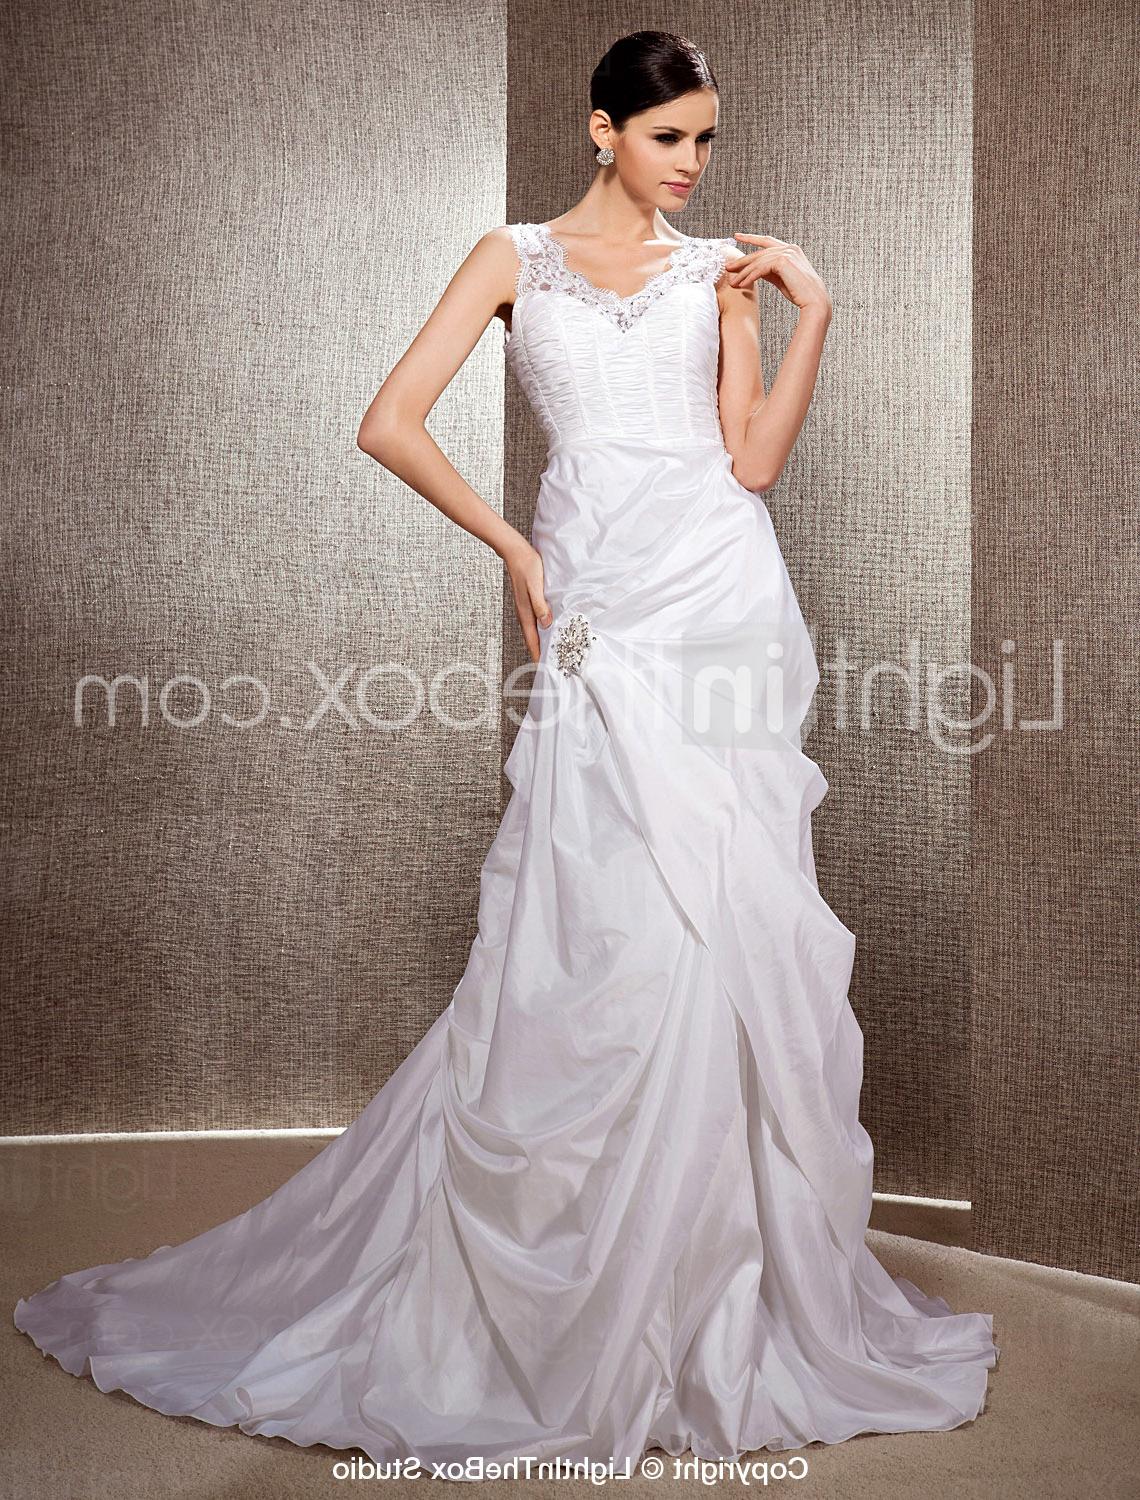 Taffeta Lace Wedding Dress